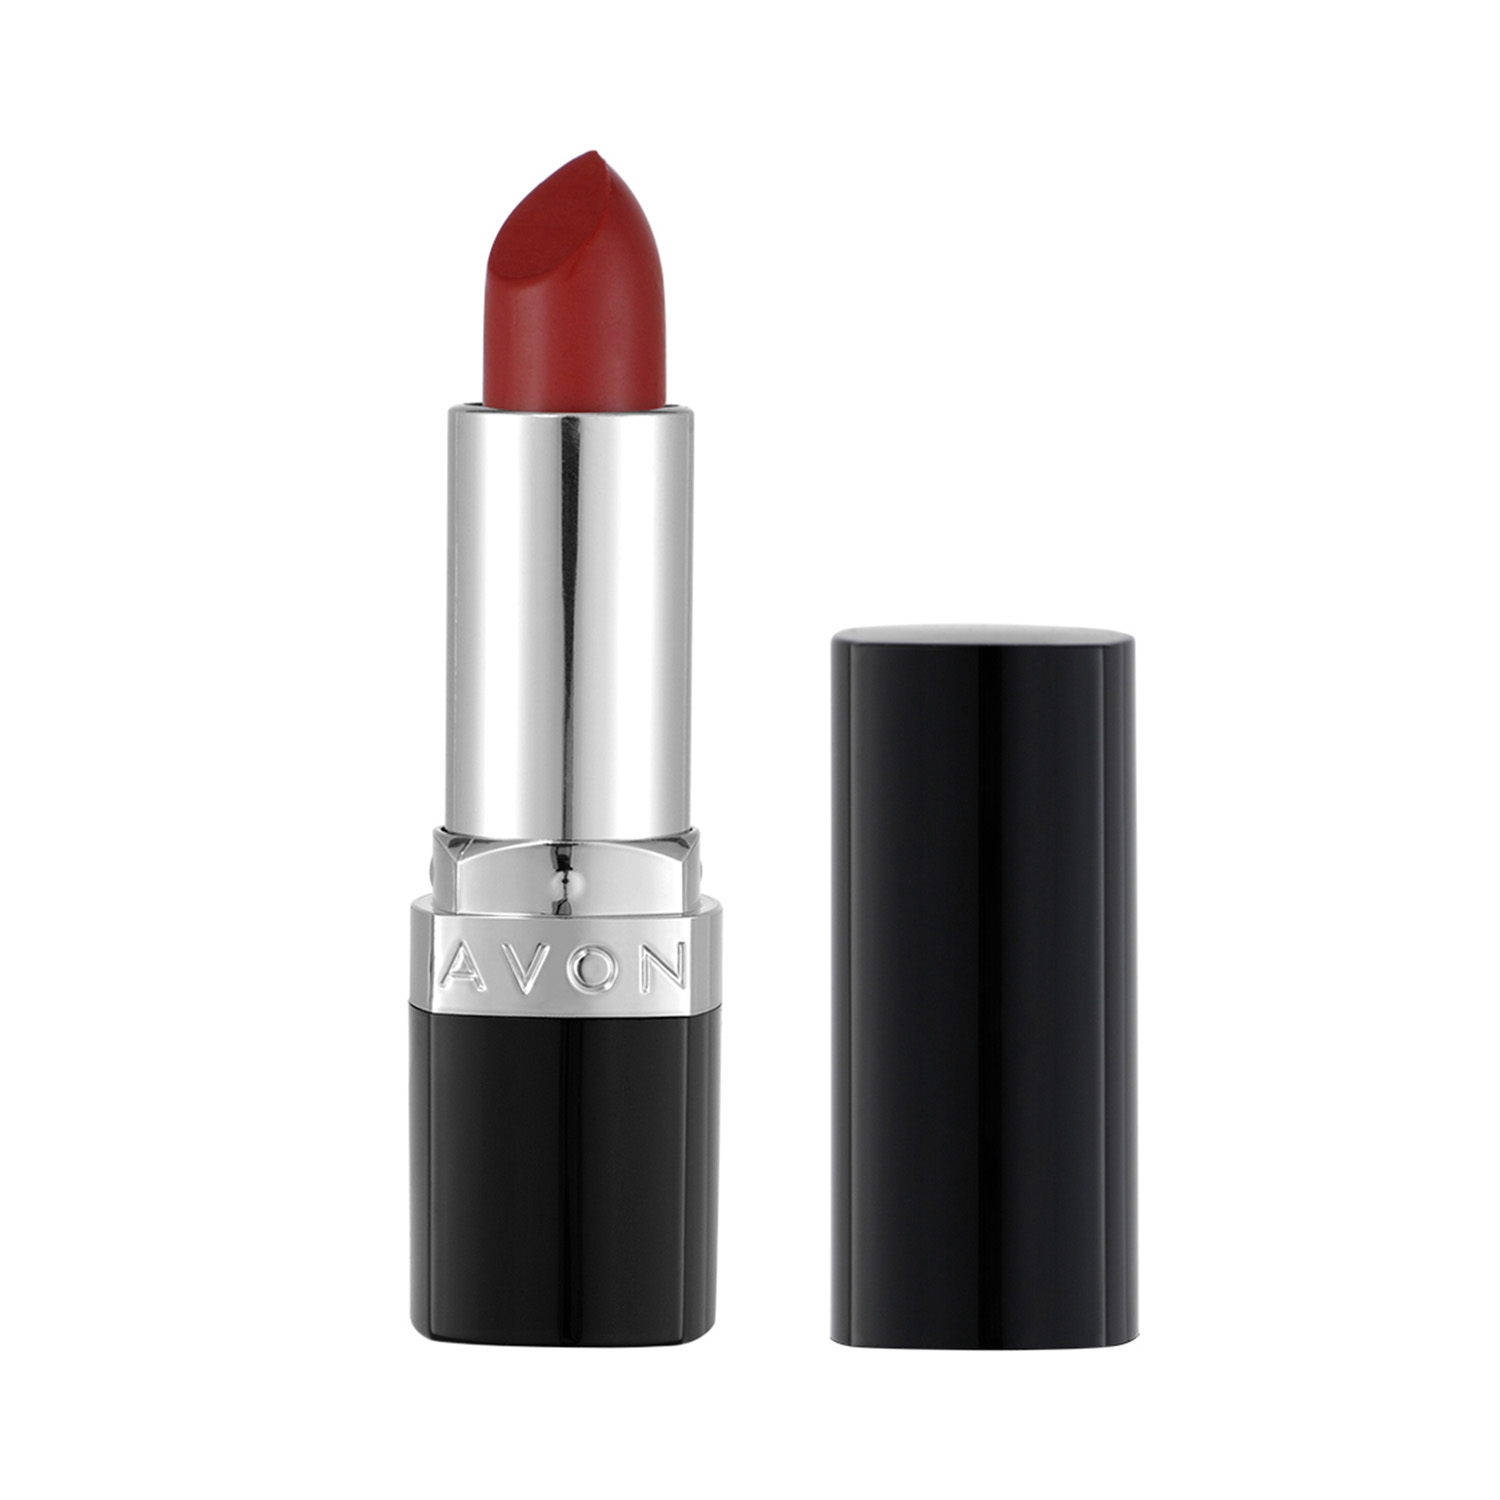 Avon | Avon True Color Lipstick SPF 15 - Red 2000 (3.8g)